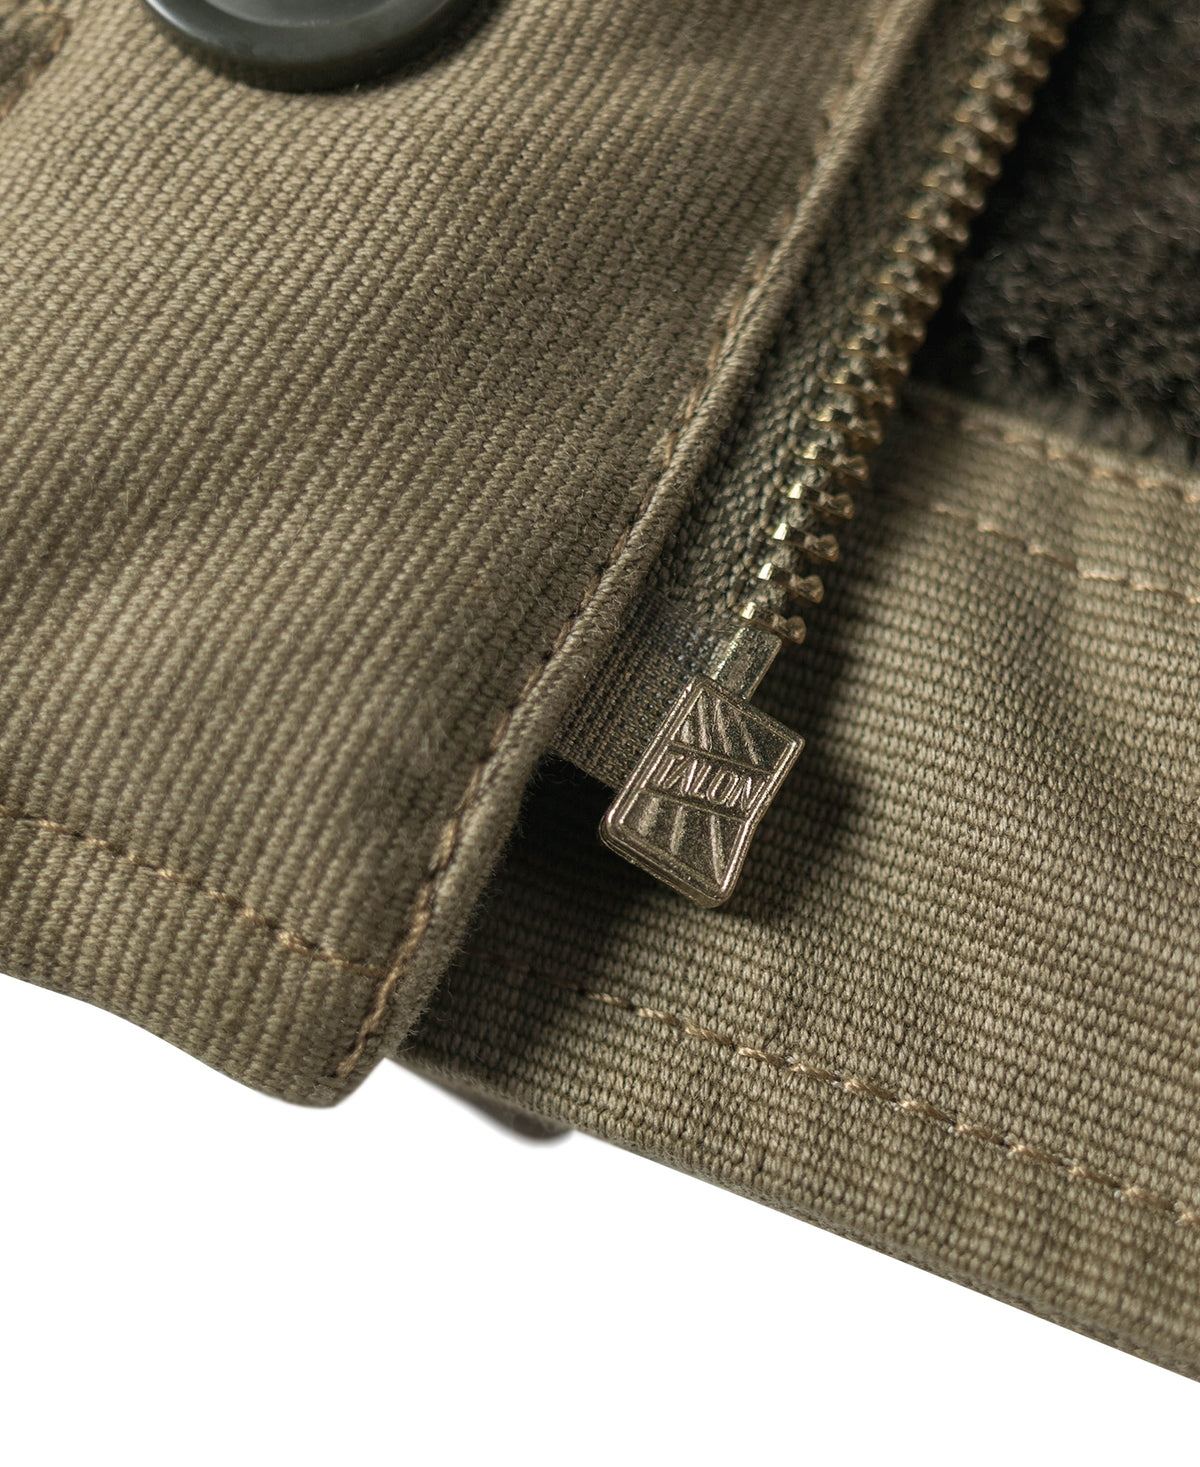 1940s USN 3rd Type N-1 Woolen Deck Jacket - Khaki Stencil